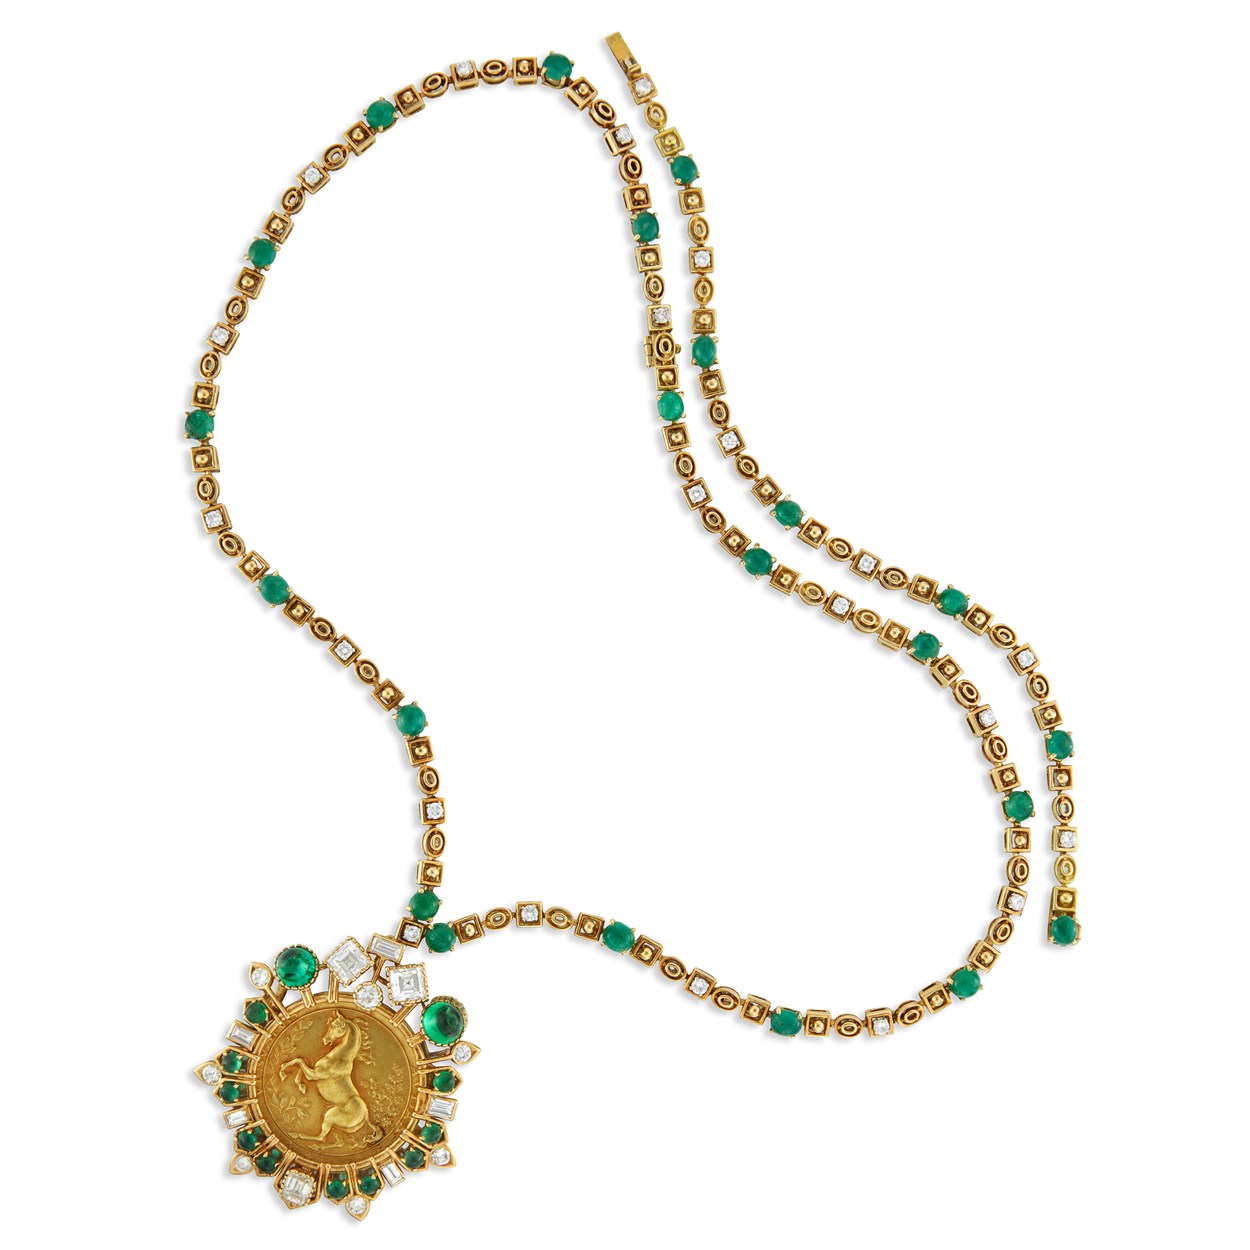 Lot 69 - An emerald, diamond, and eighteen karat gold necklace, bracelet and medallion